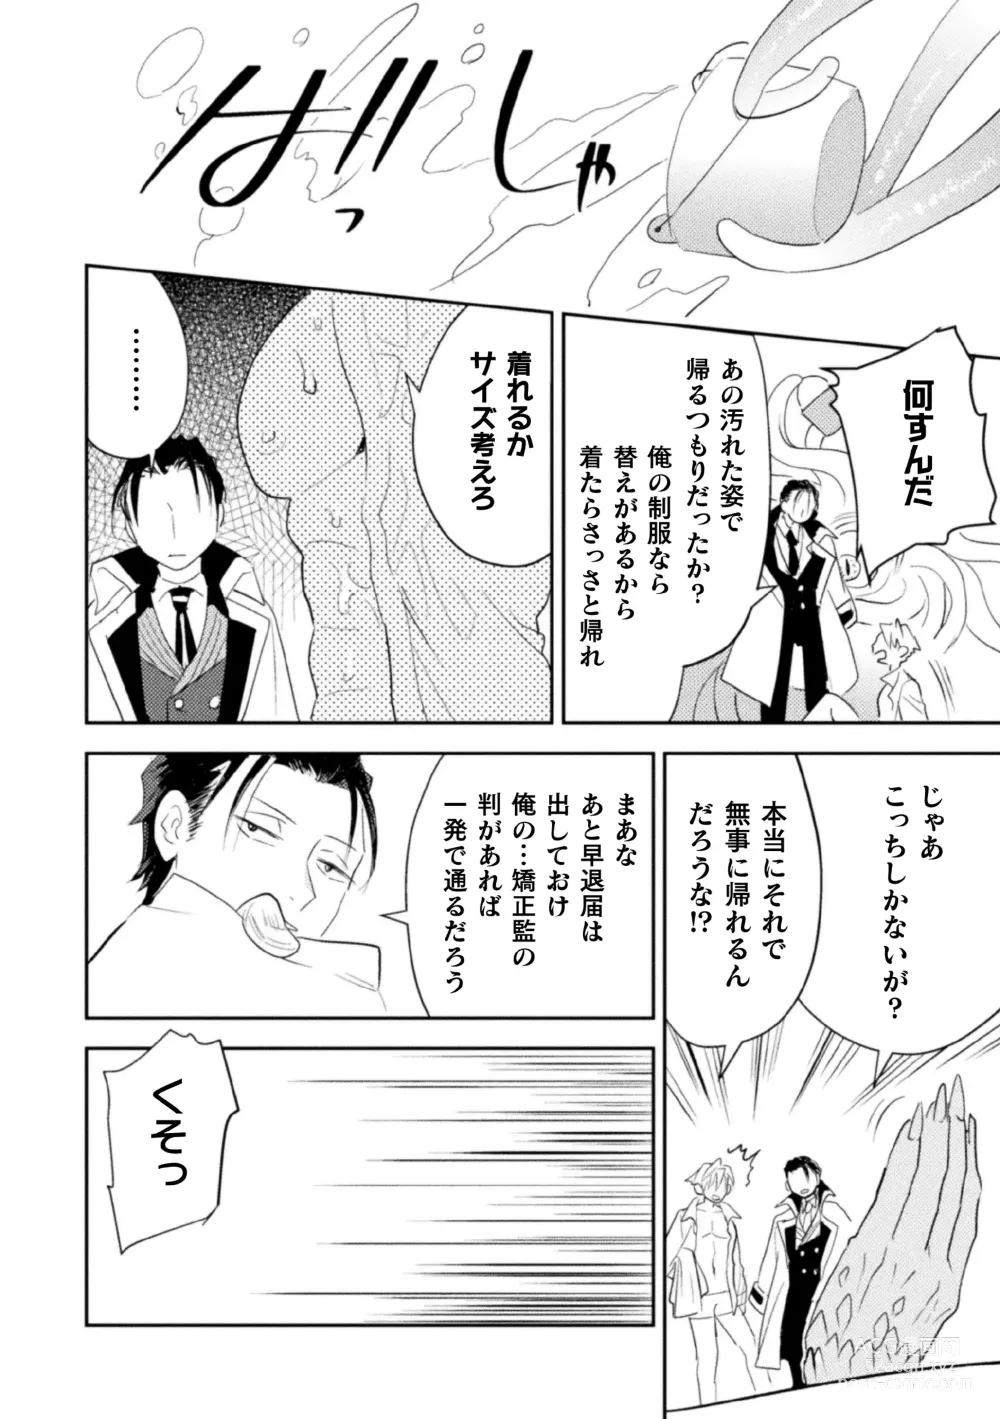 Page 40 of manga Zekkai Rougoku 4 Zekkai no Ori to Inma no Wana